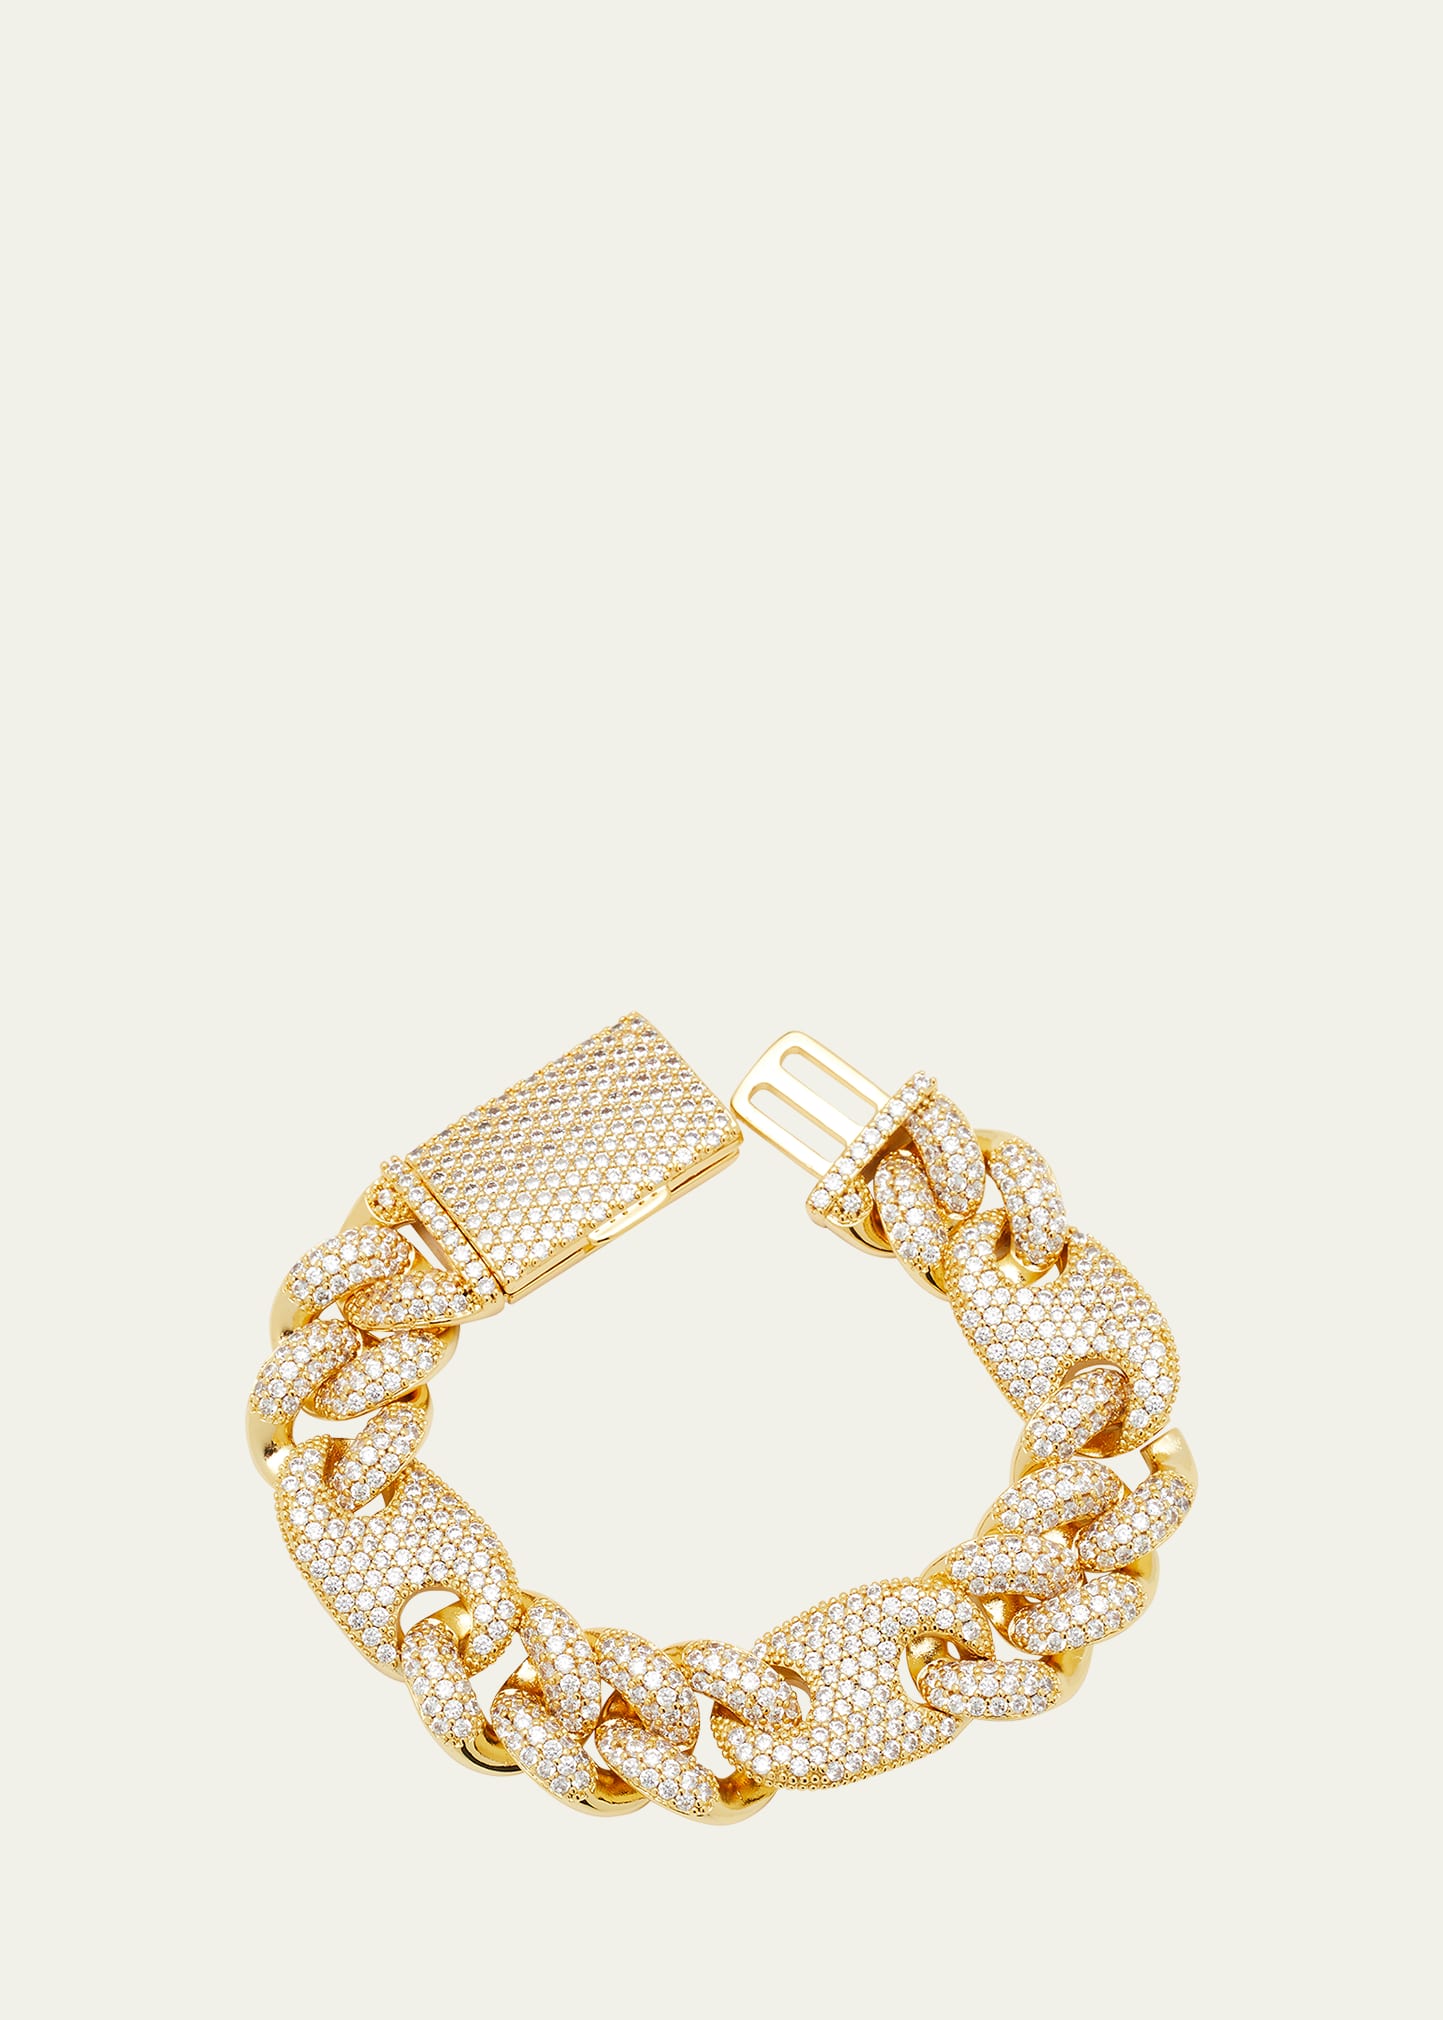 Toscano Pavé Curb Chain Bracelet